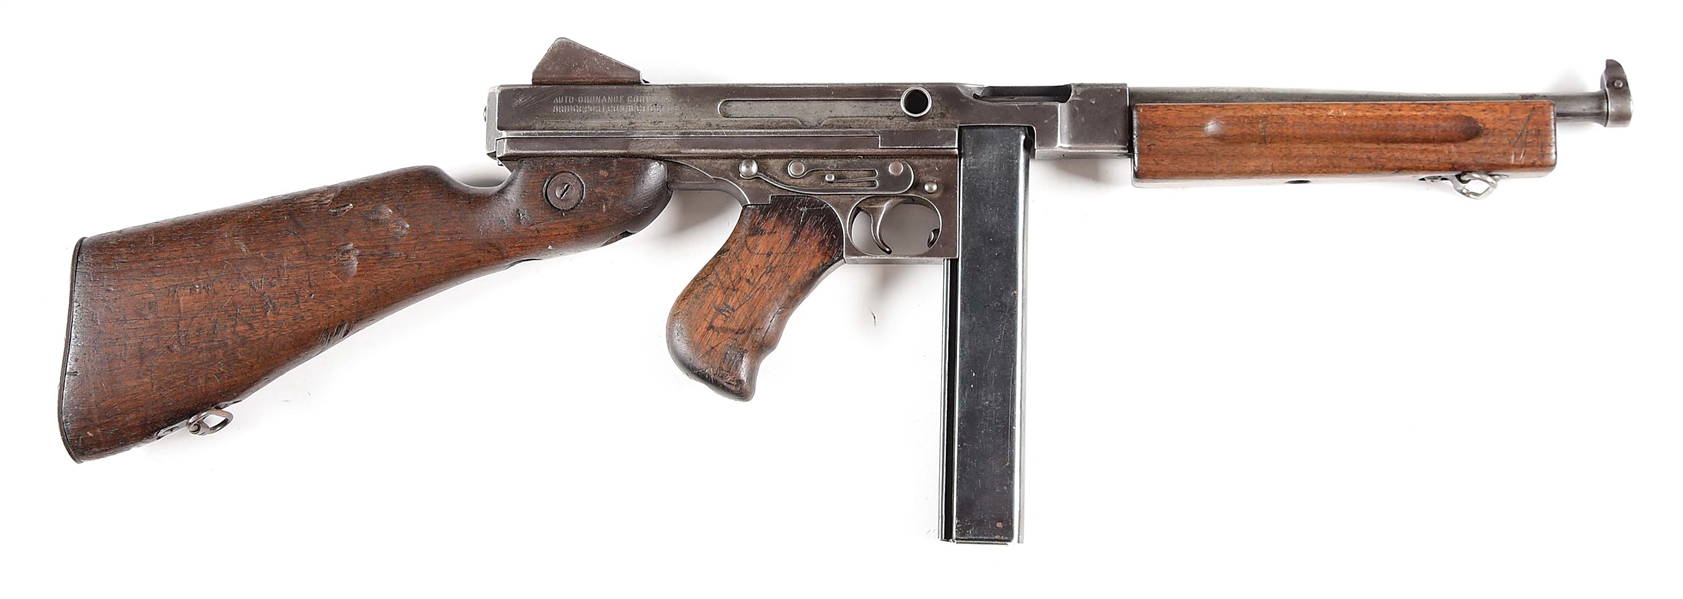 (N) CLASSIC U.S. PROPERTY MARKED WORLD WAR II AUTO ORDNANCE M1A1 THOMPSON MACHINE GUN (PRE-86 DEALER SAMPLE).